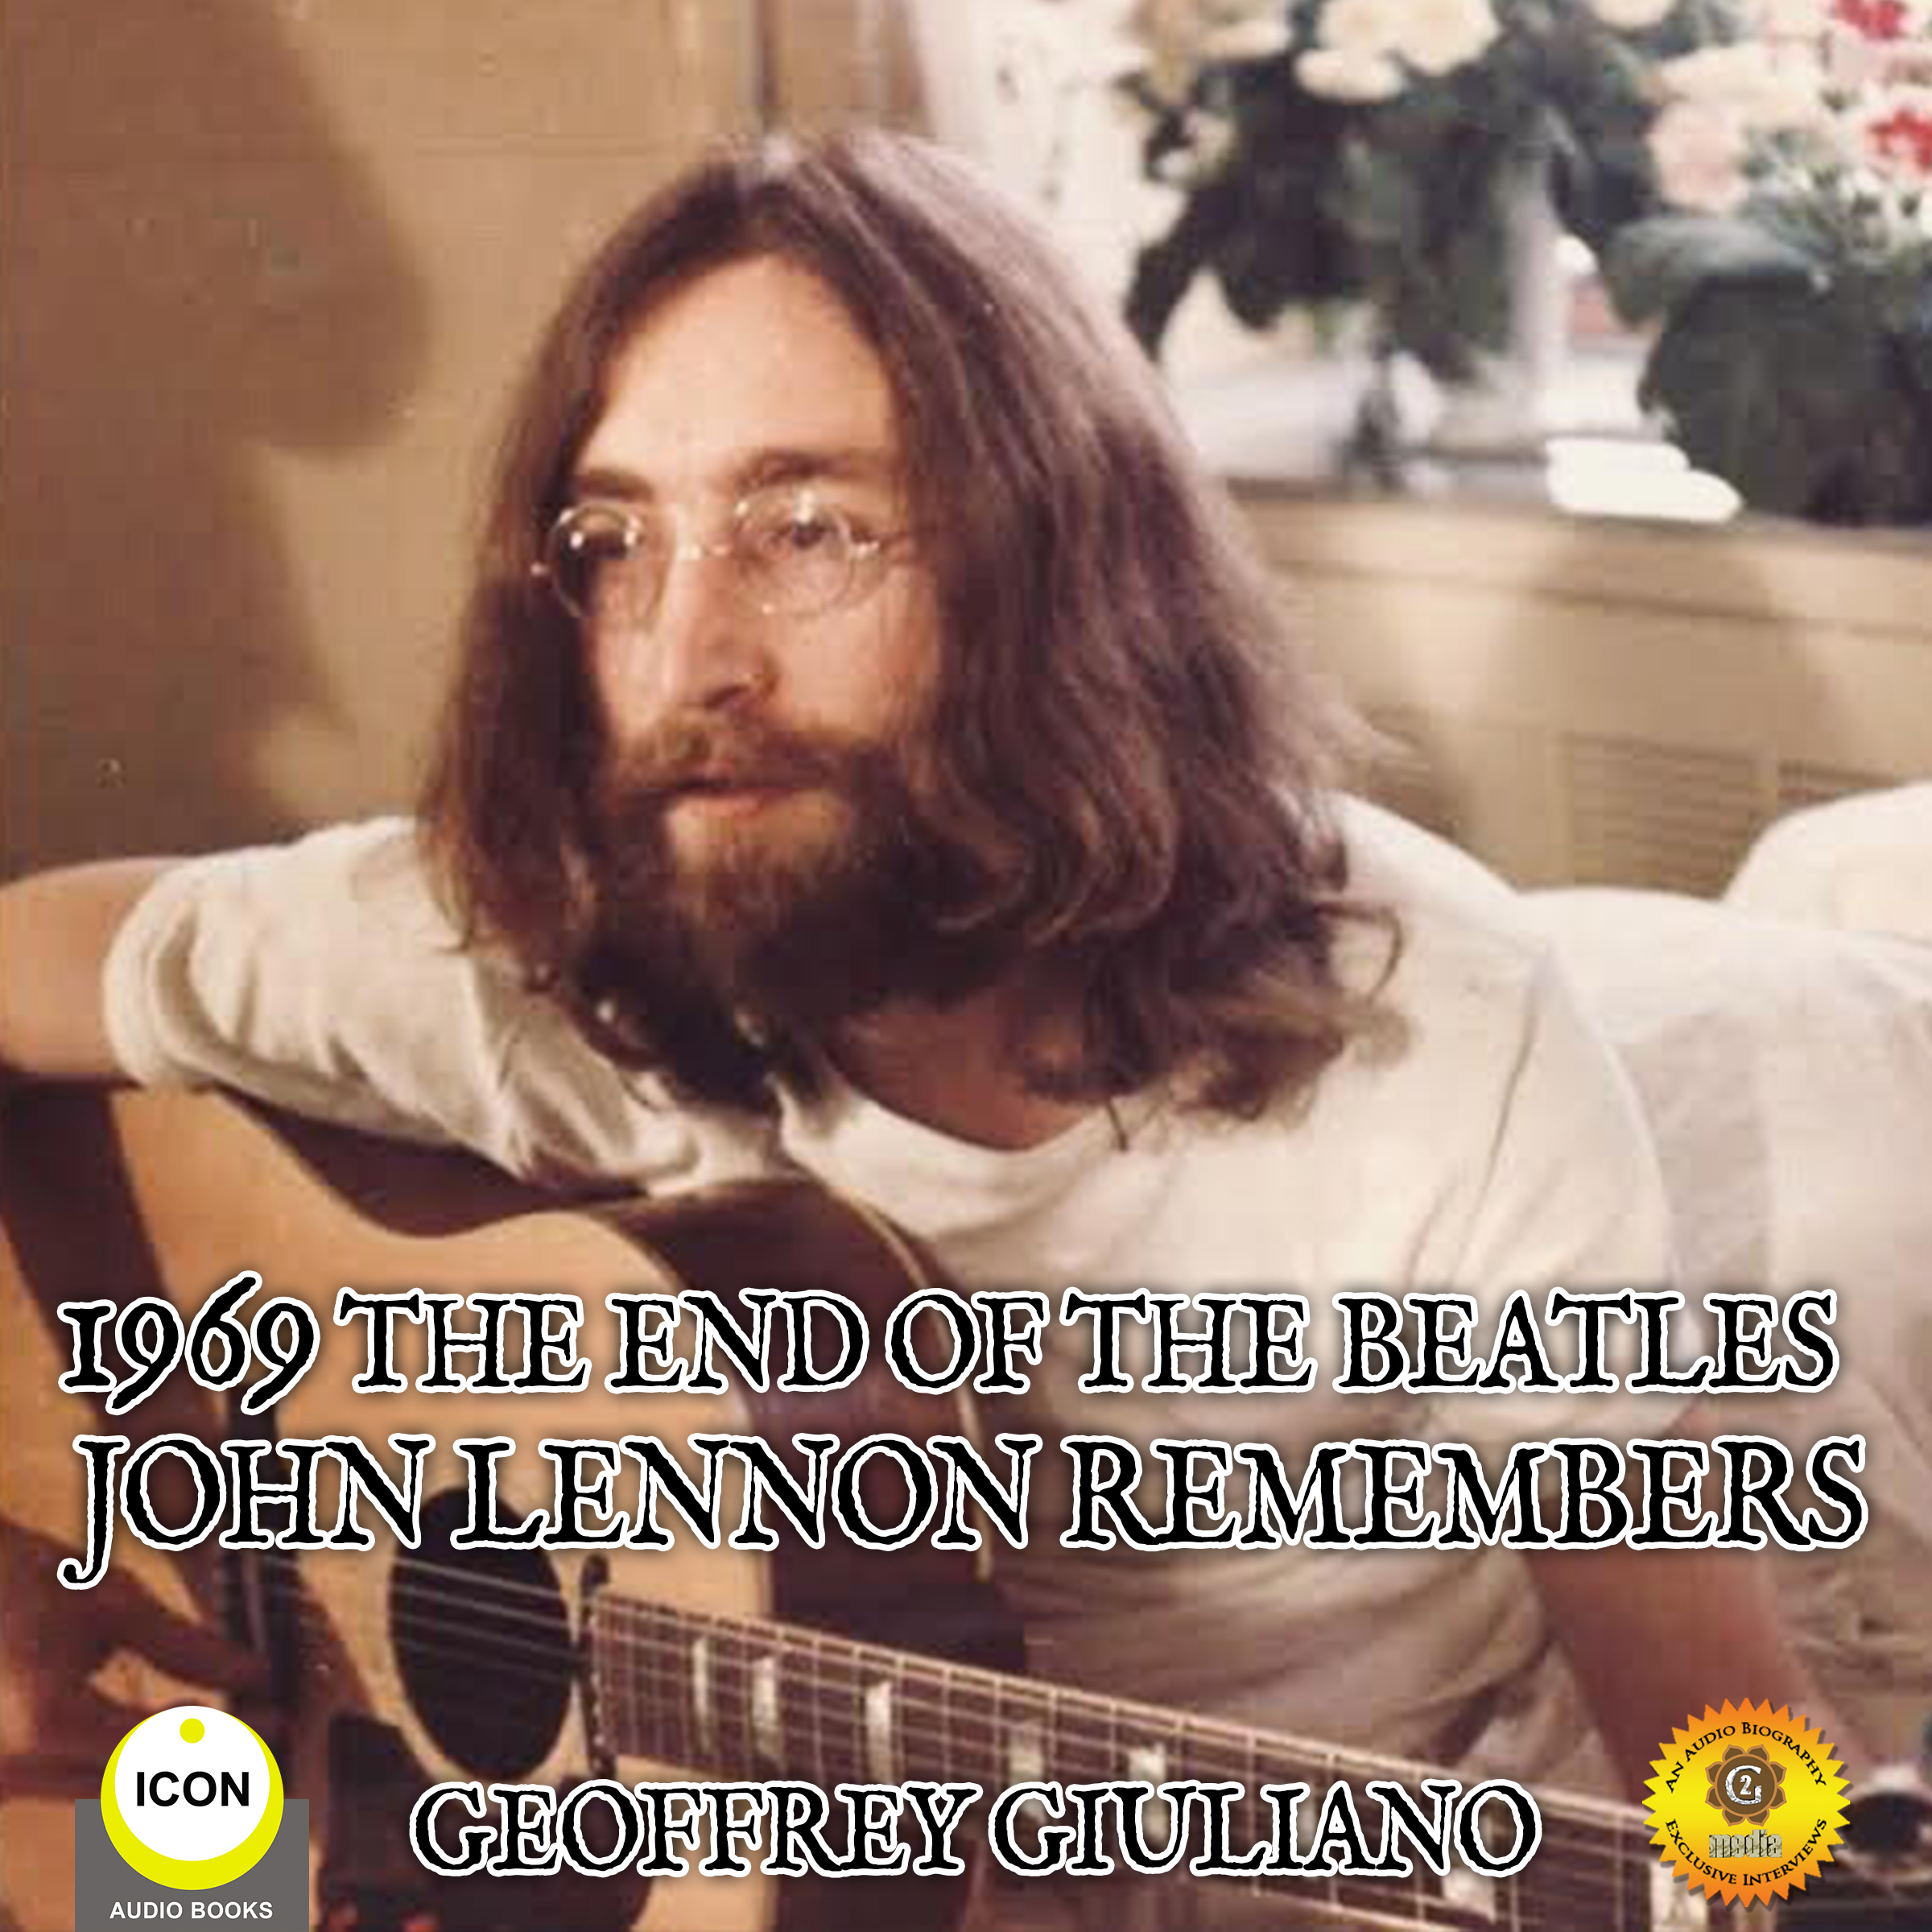 1969 The End Of The Beatles – John Lennon Remembers